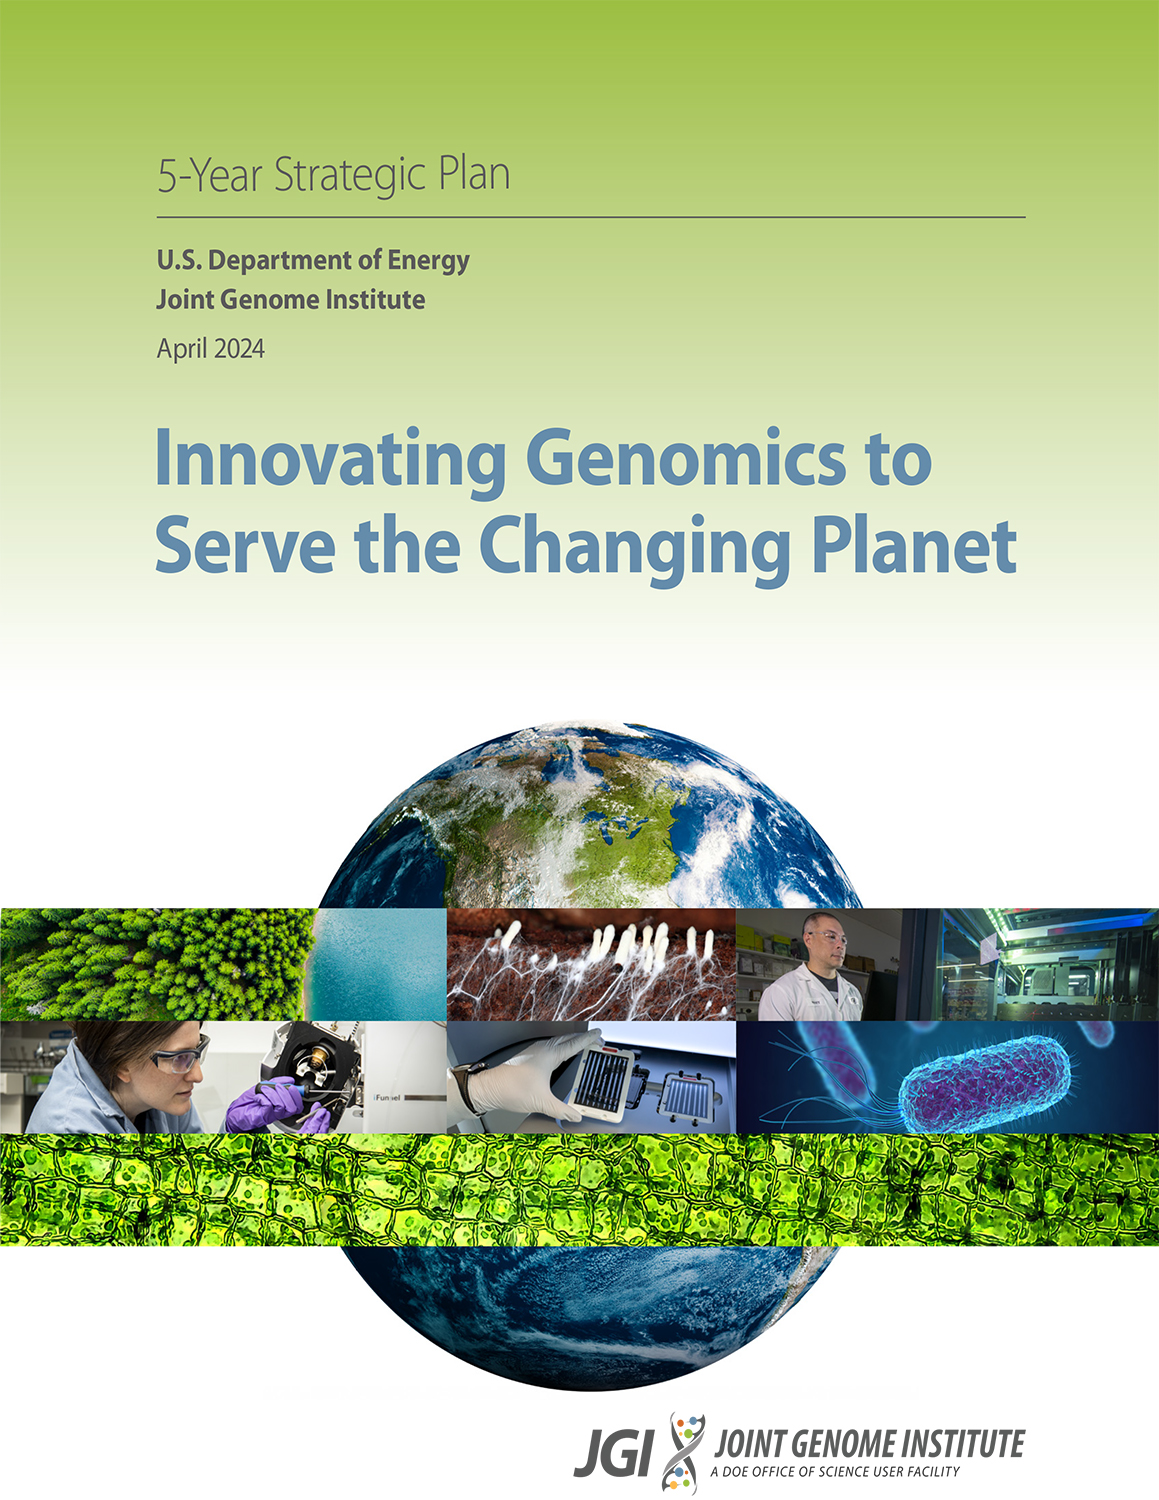 Cover of the latest JGI strategic plan